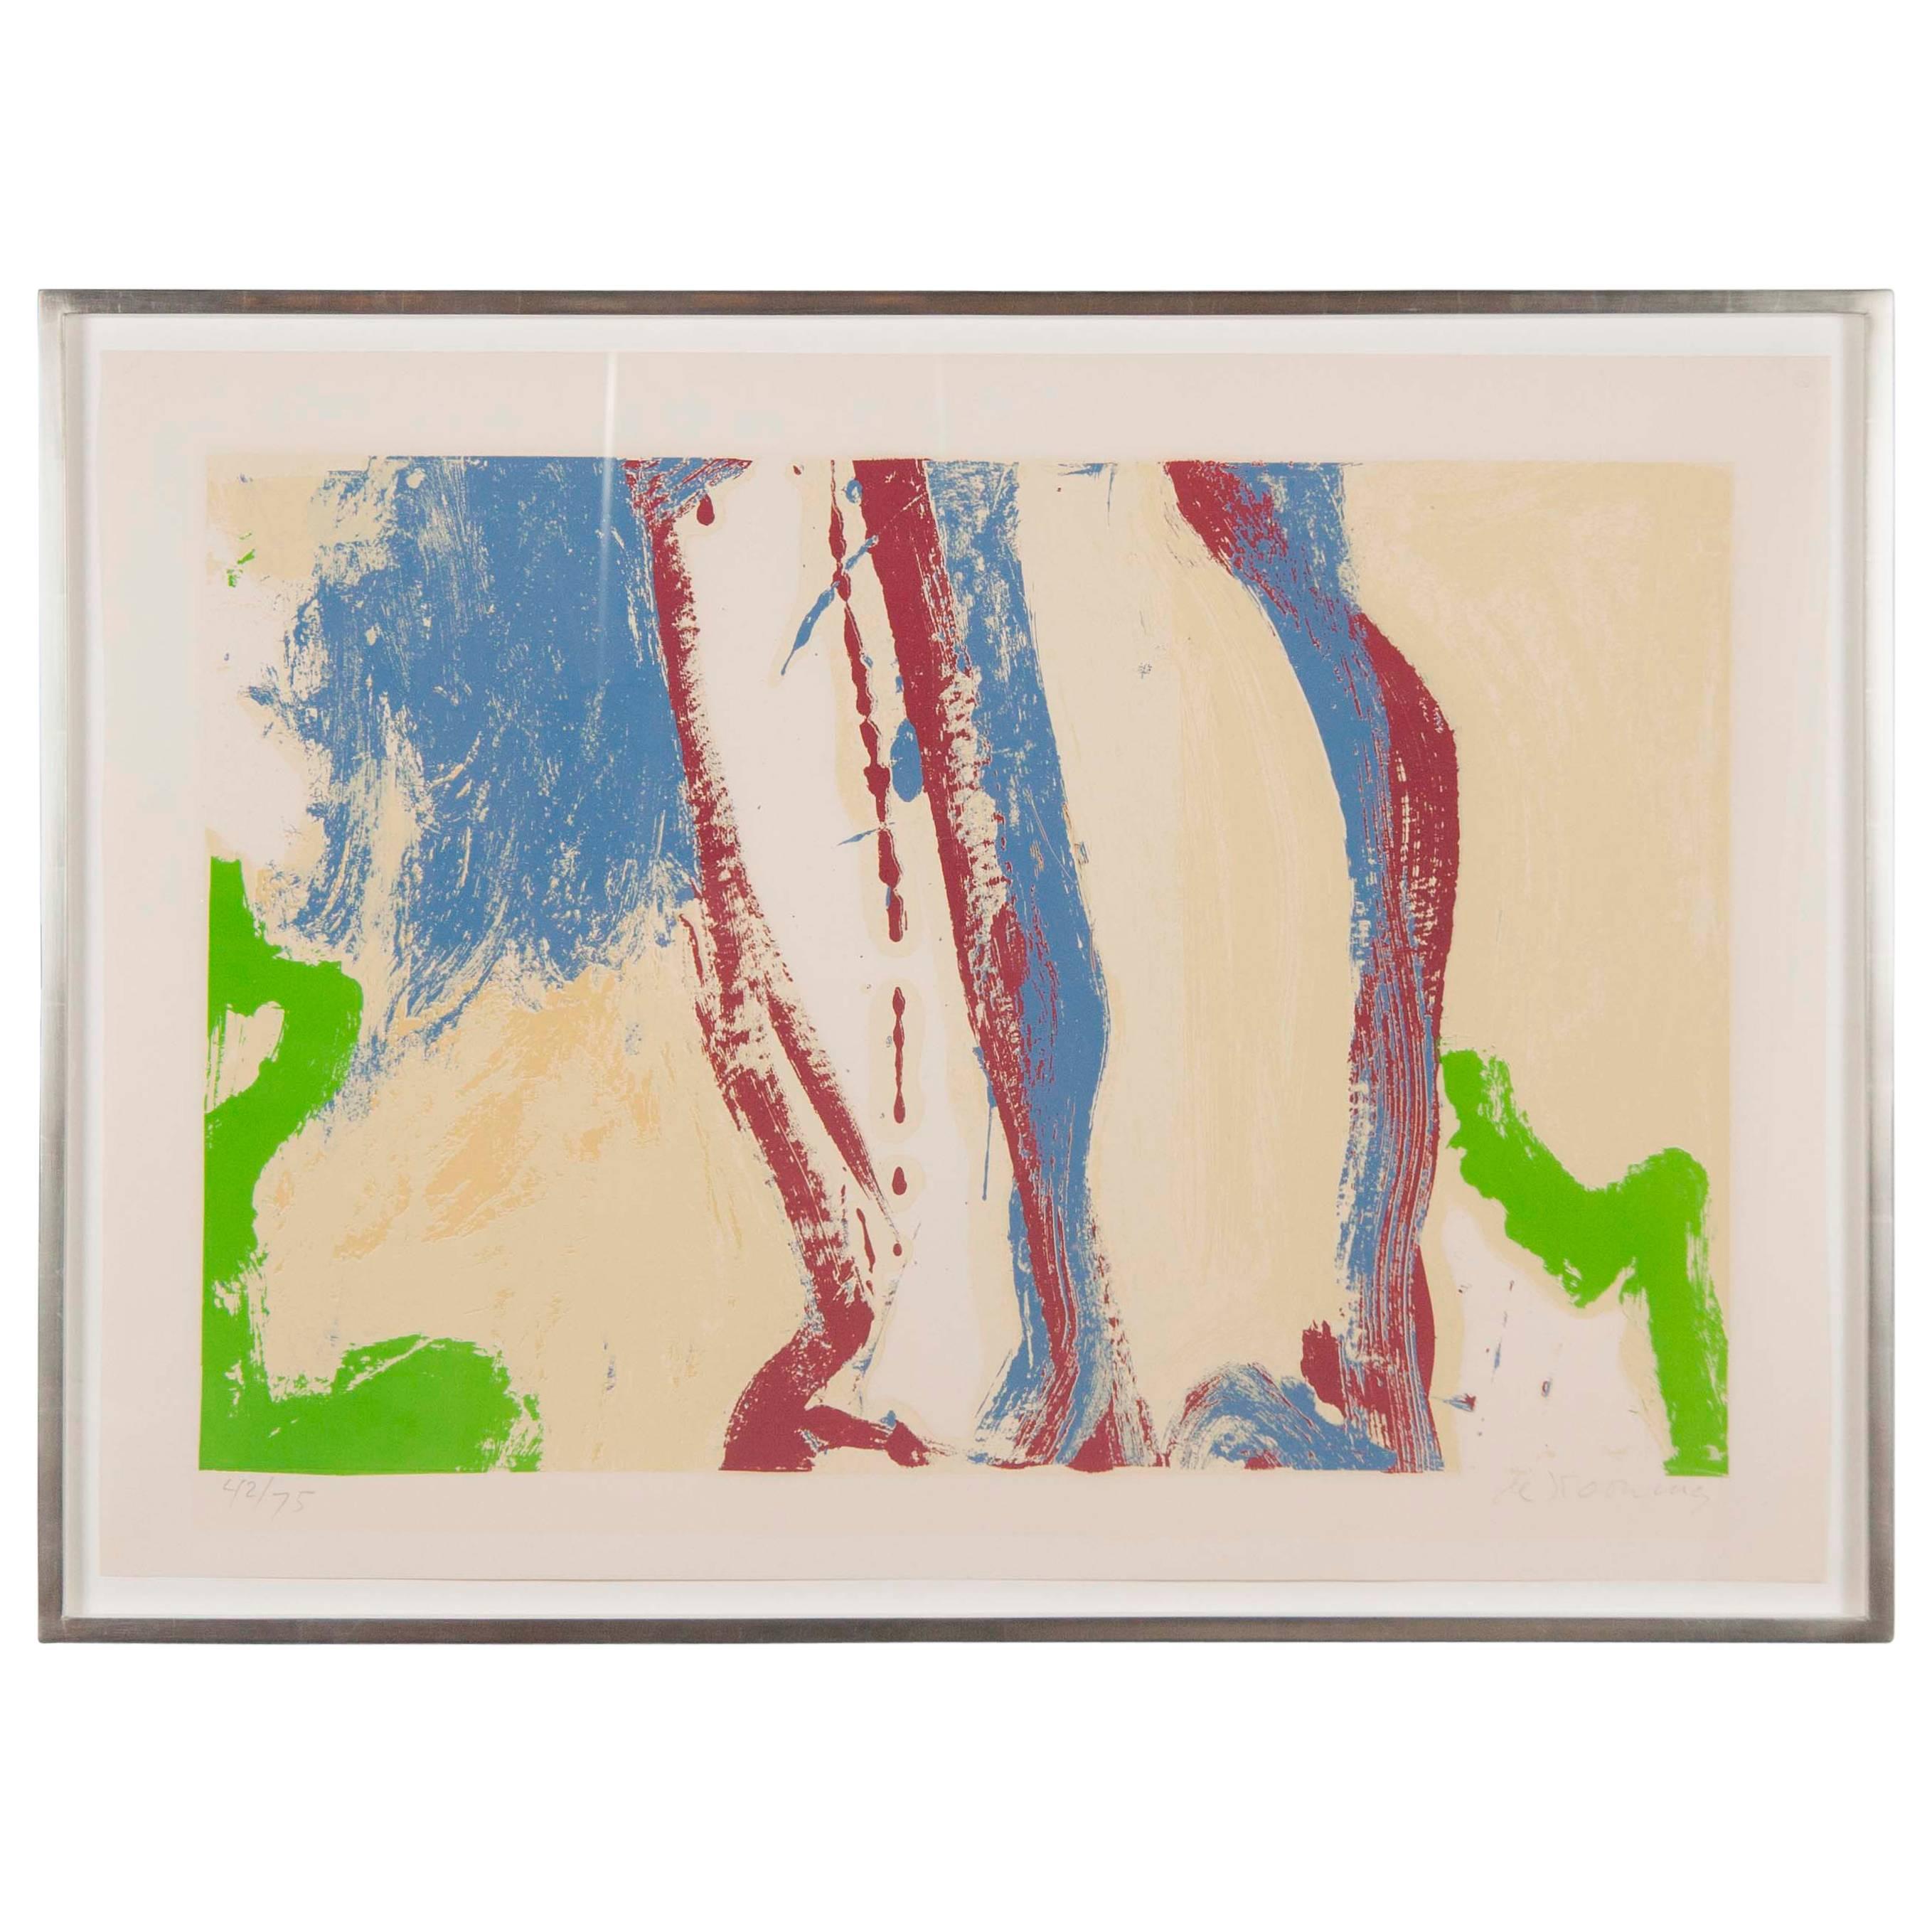 Sérigraphie sans titre de l'artiste expressionniste abstrait Willem de Kooning